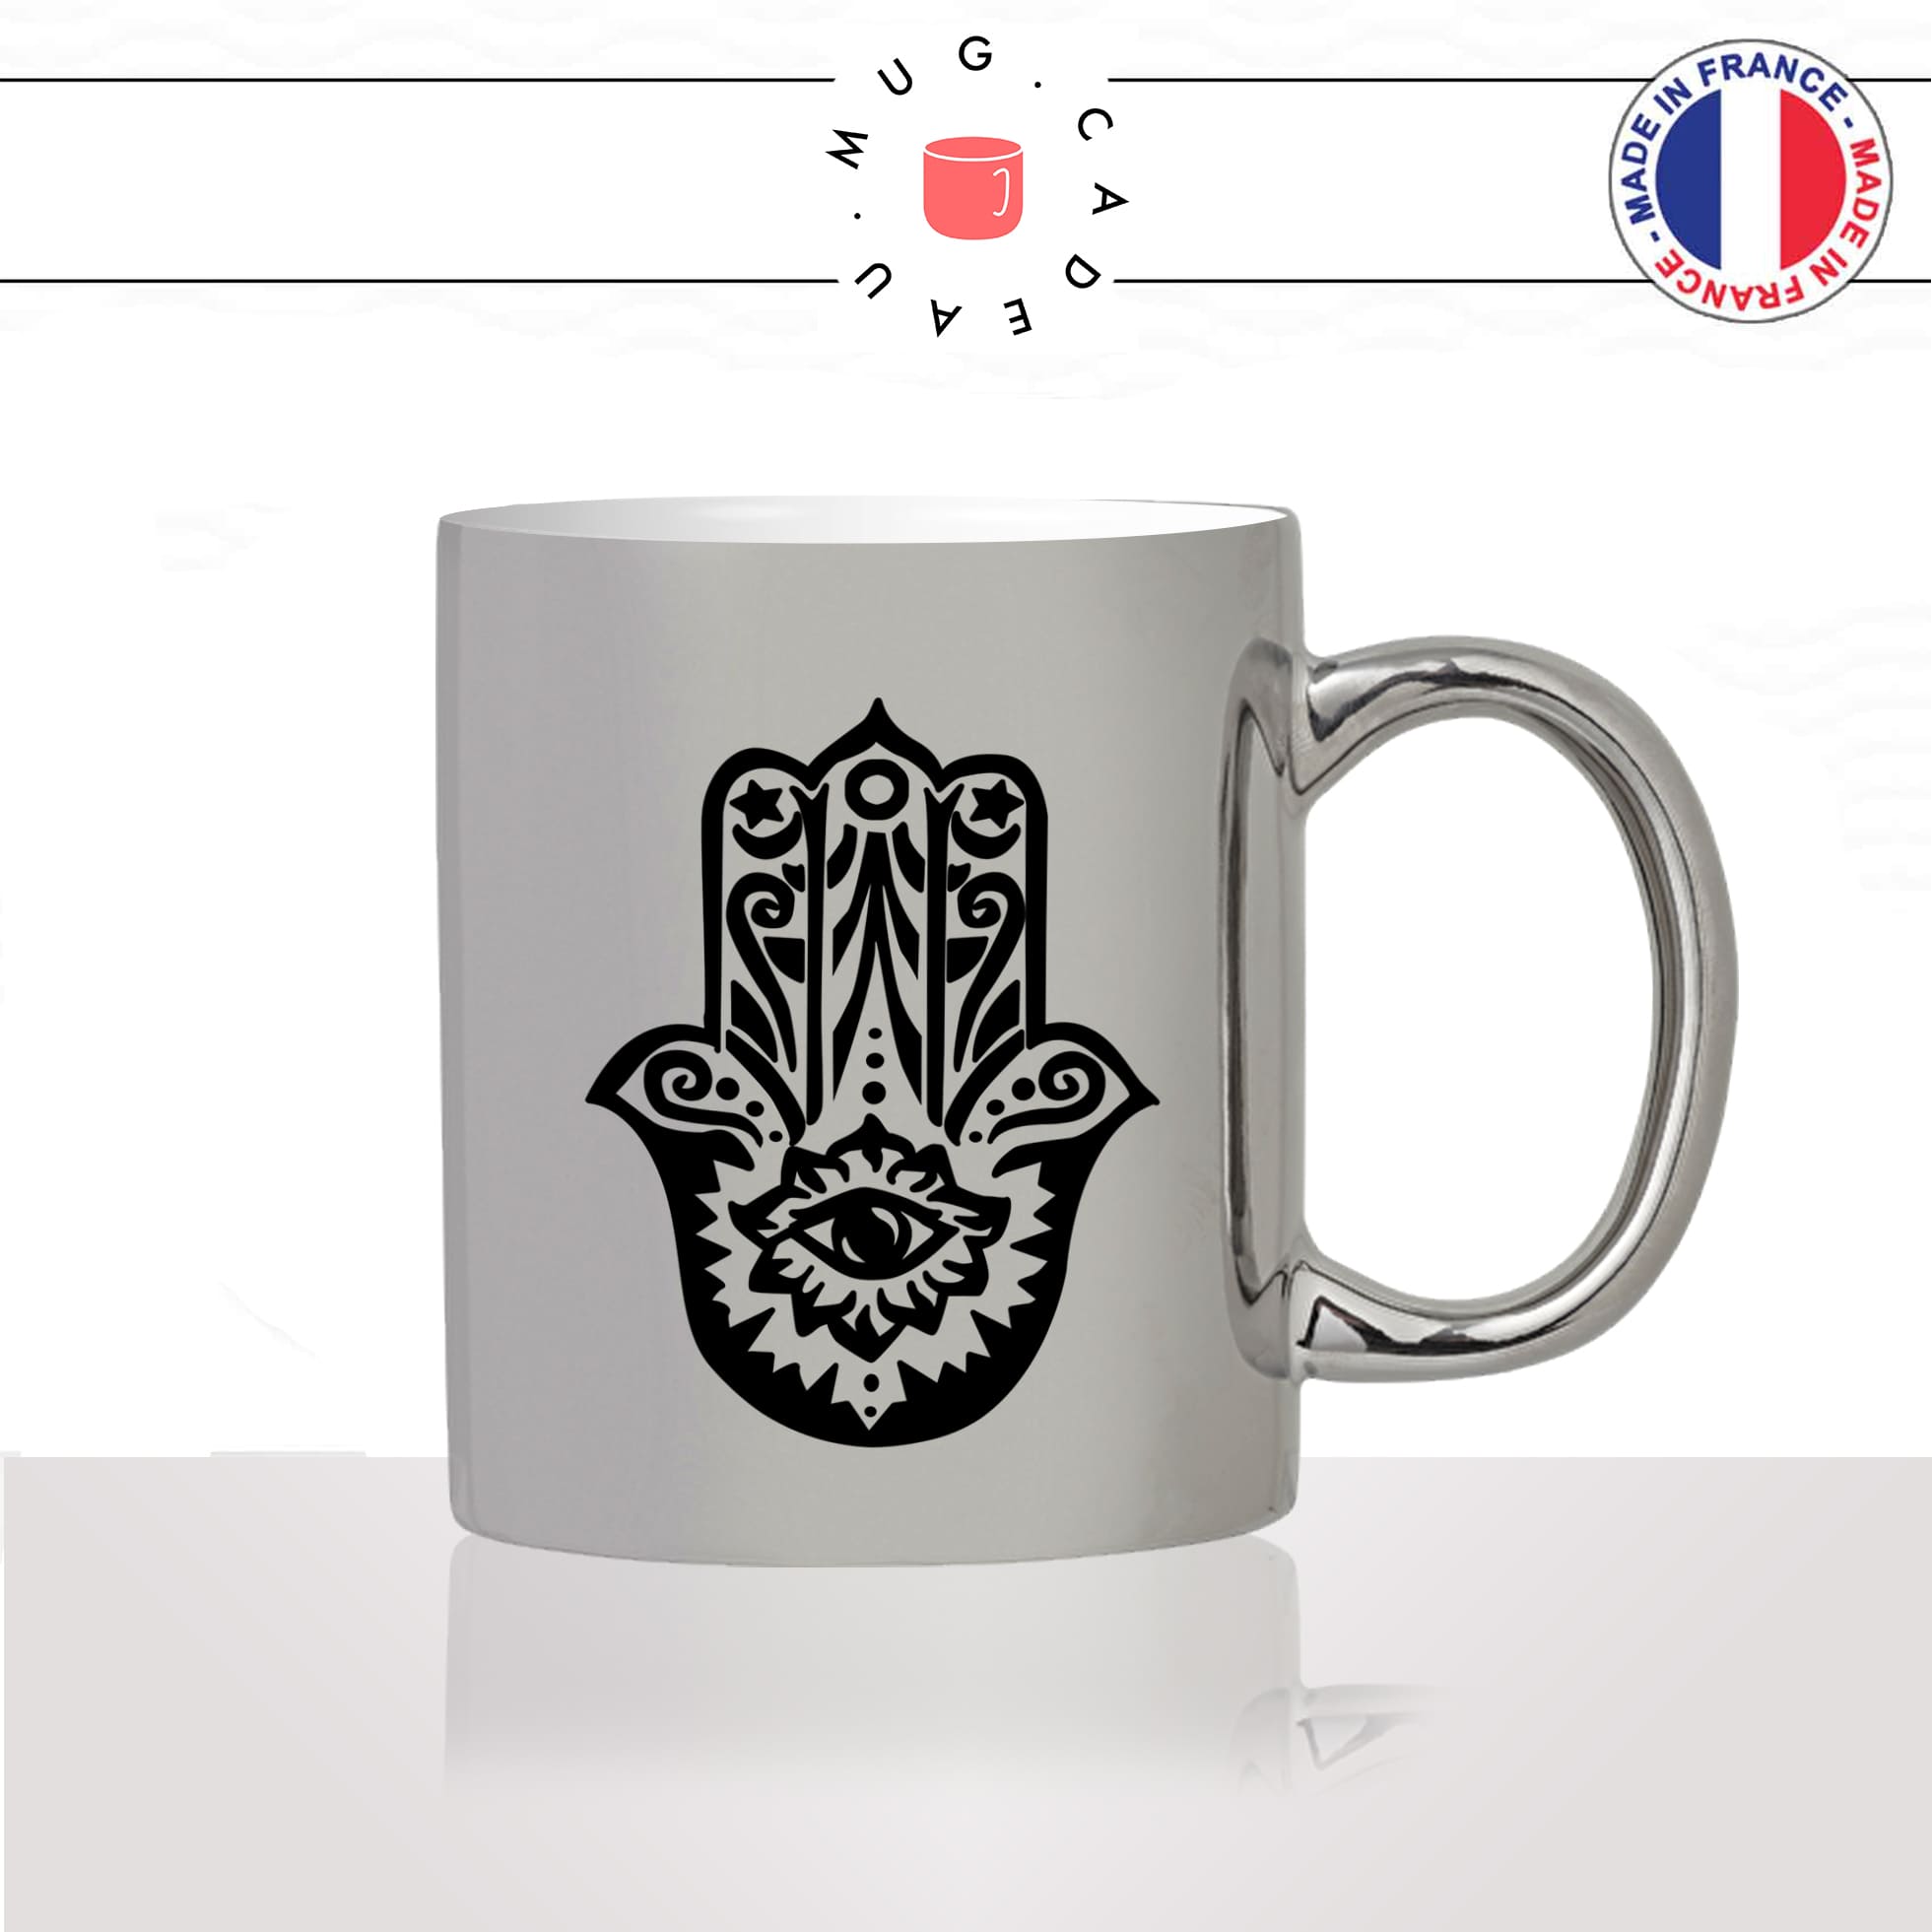 mug-tasse-argent-argenté-silver-dessin-religion-arabe-main-fatma-joli-fleur-oeil-henné-henna-idée-cadeau-fun-cool-café-thé2